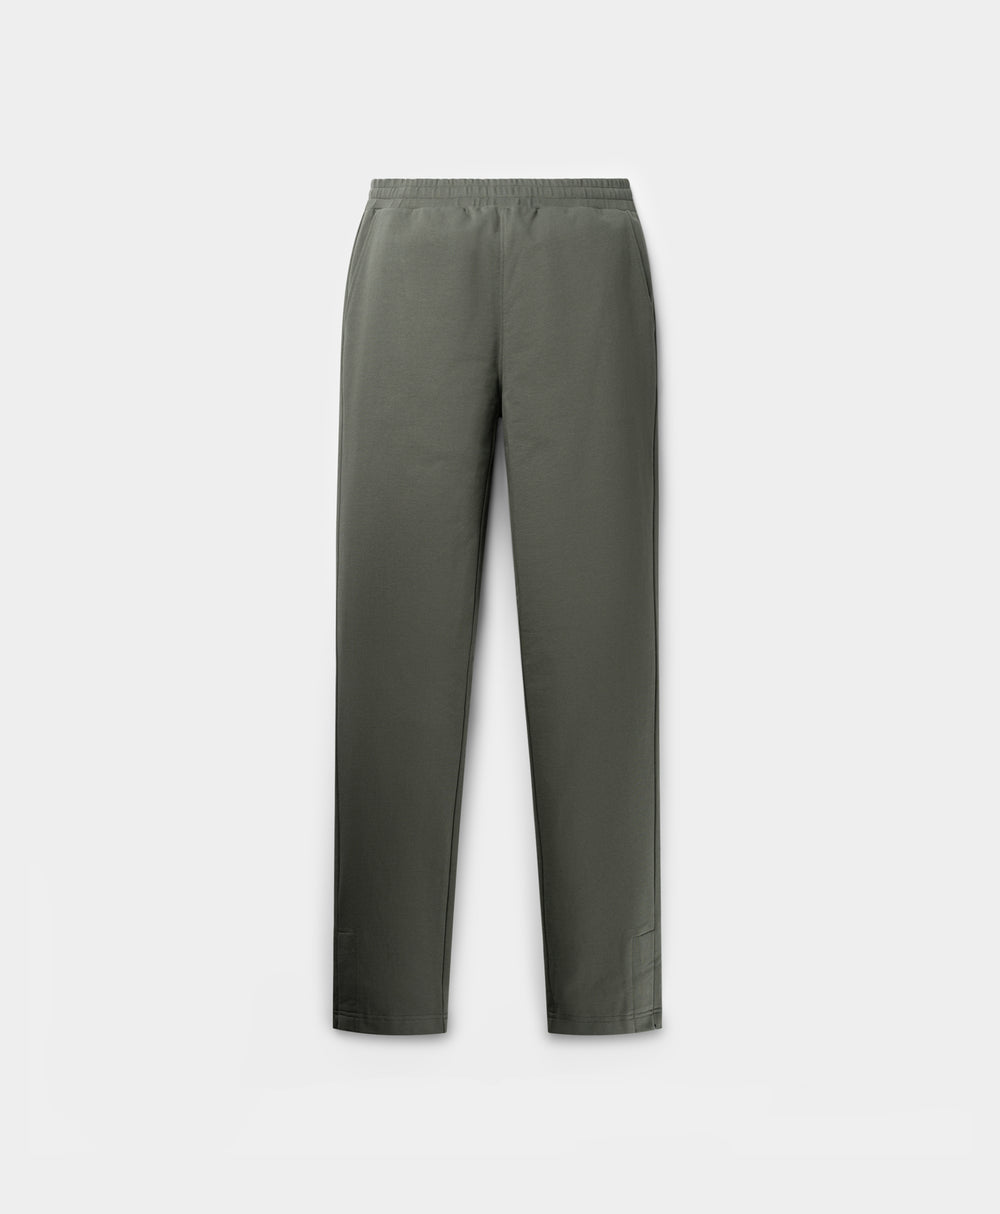 DP - Chimera Green Fola Sweatpants - Packshot - Front 